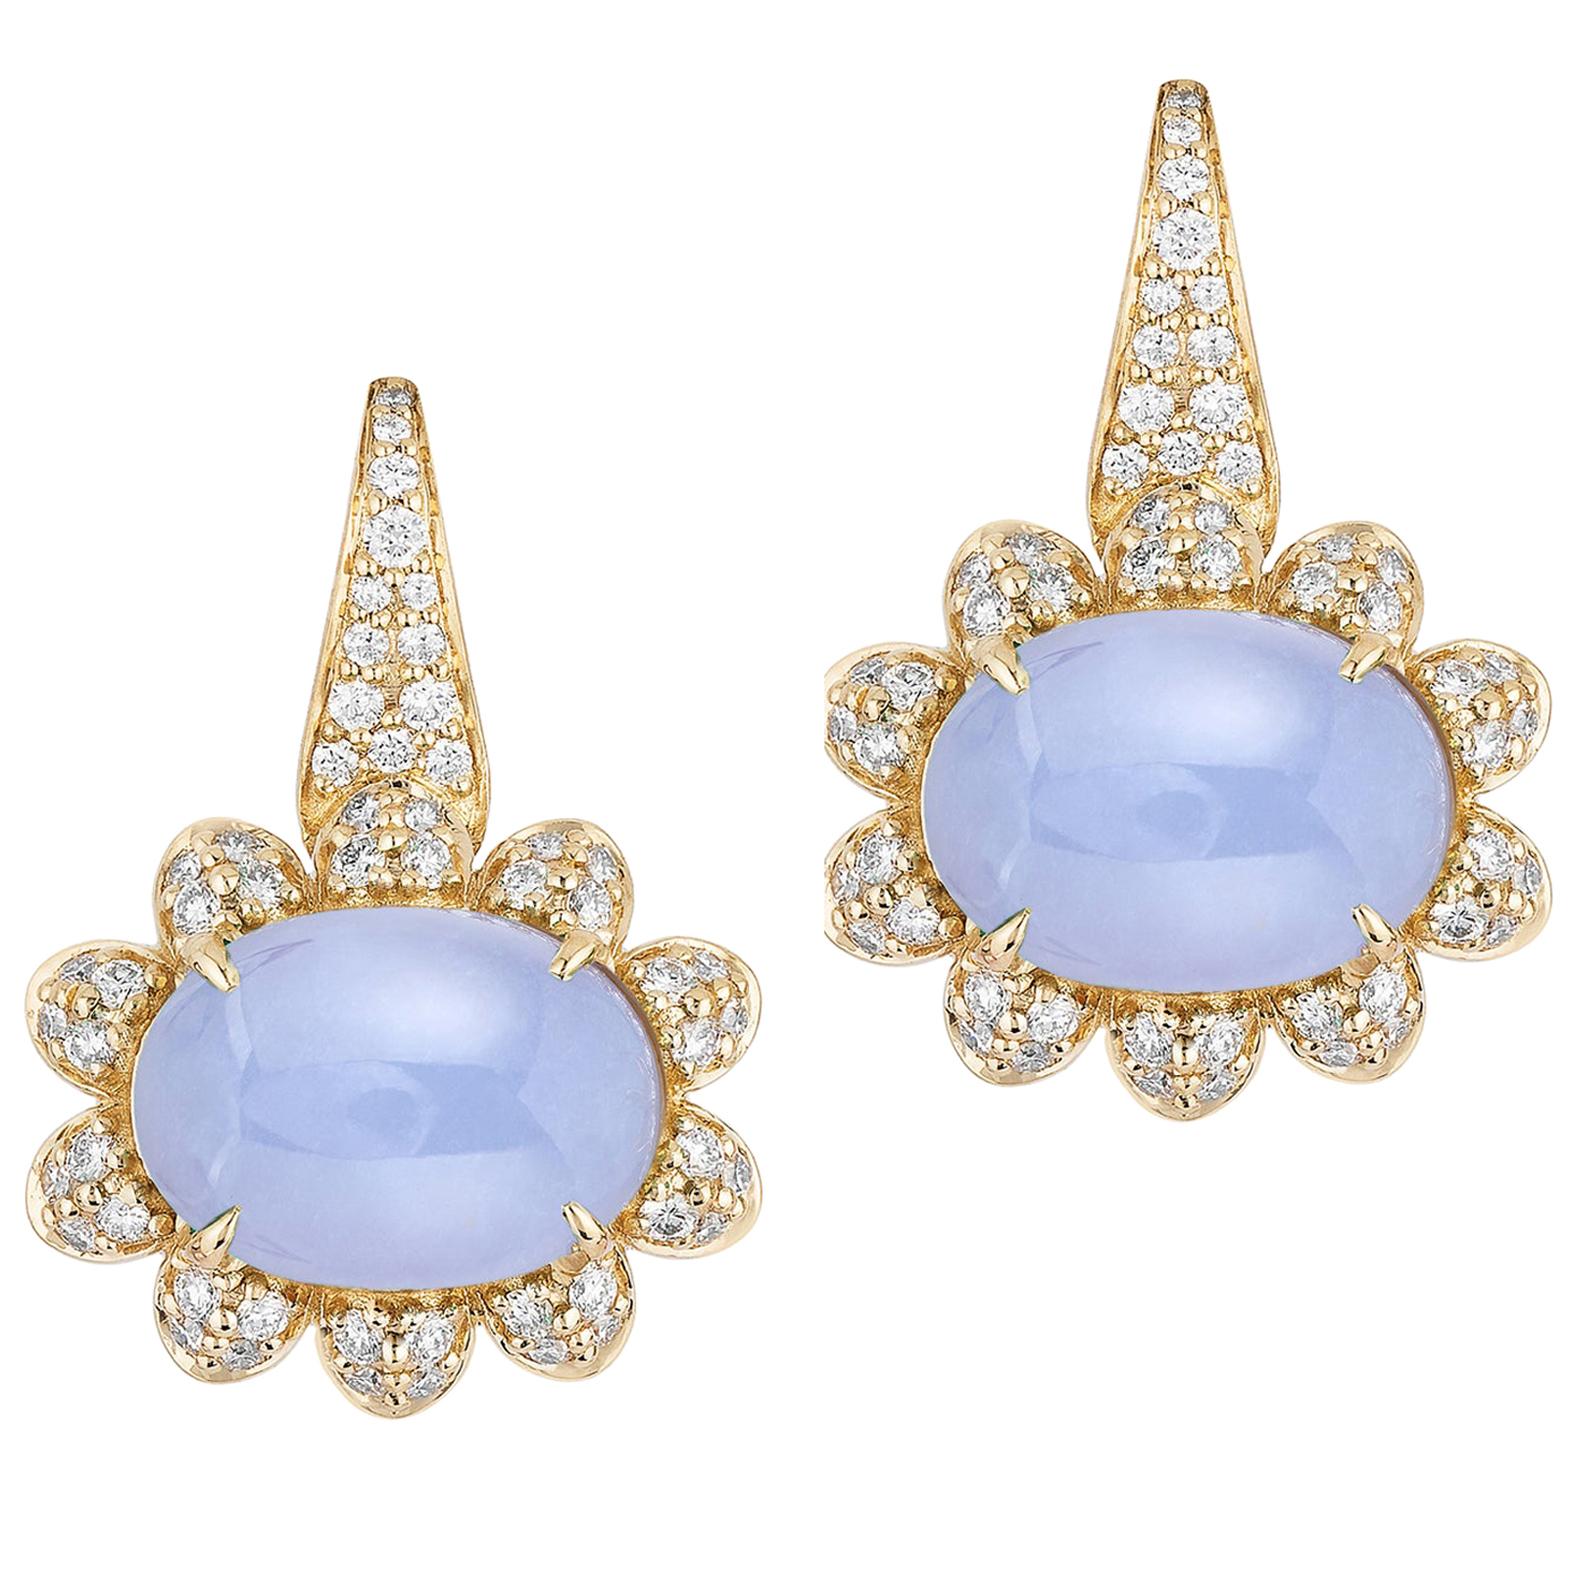 Goshwara Oval Cabochon Blue Chalcedony and Diamond Earrings